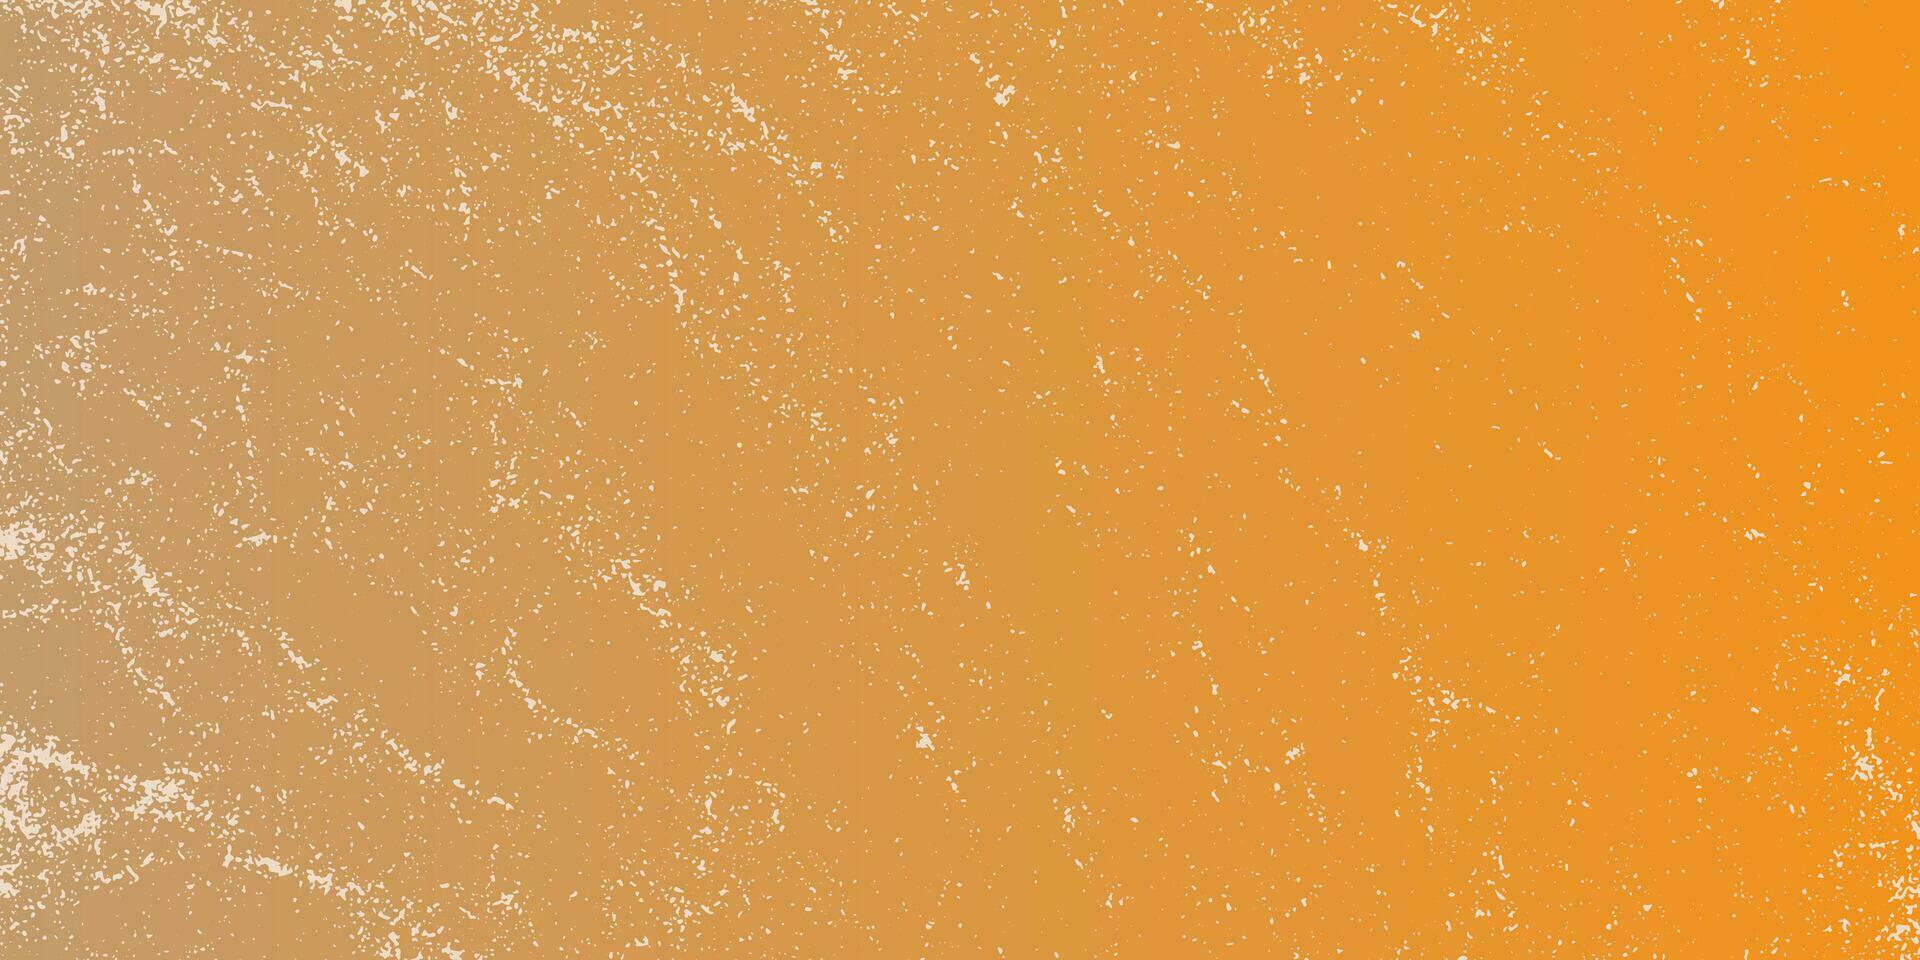 orange and white grunge texture background vector